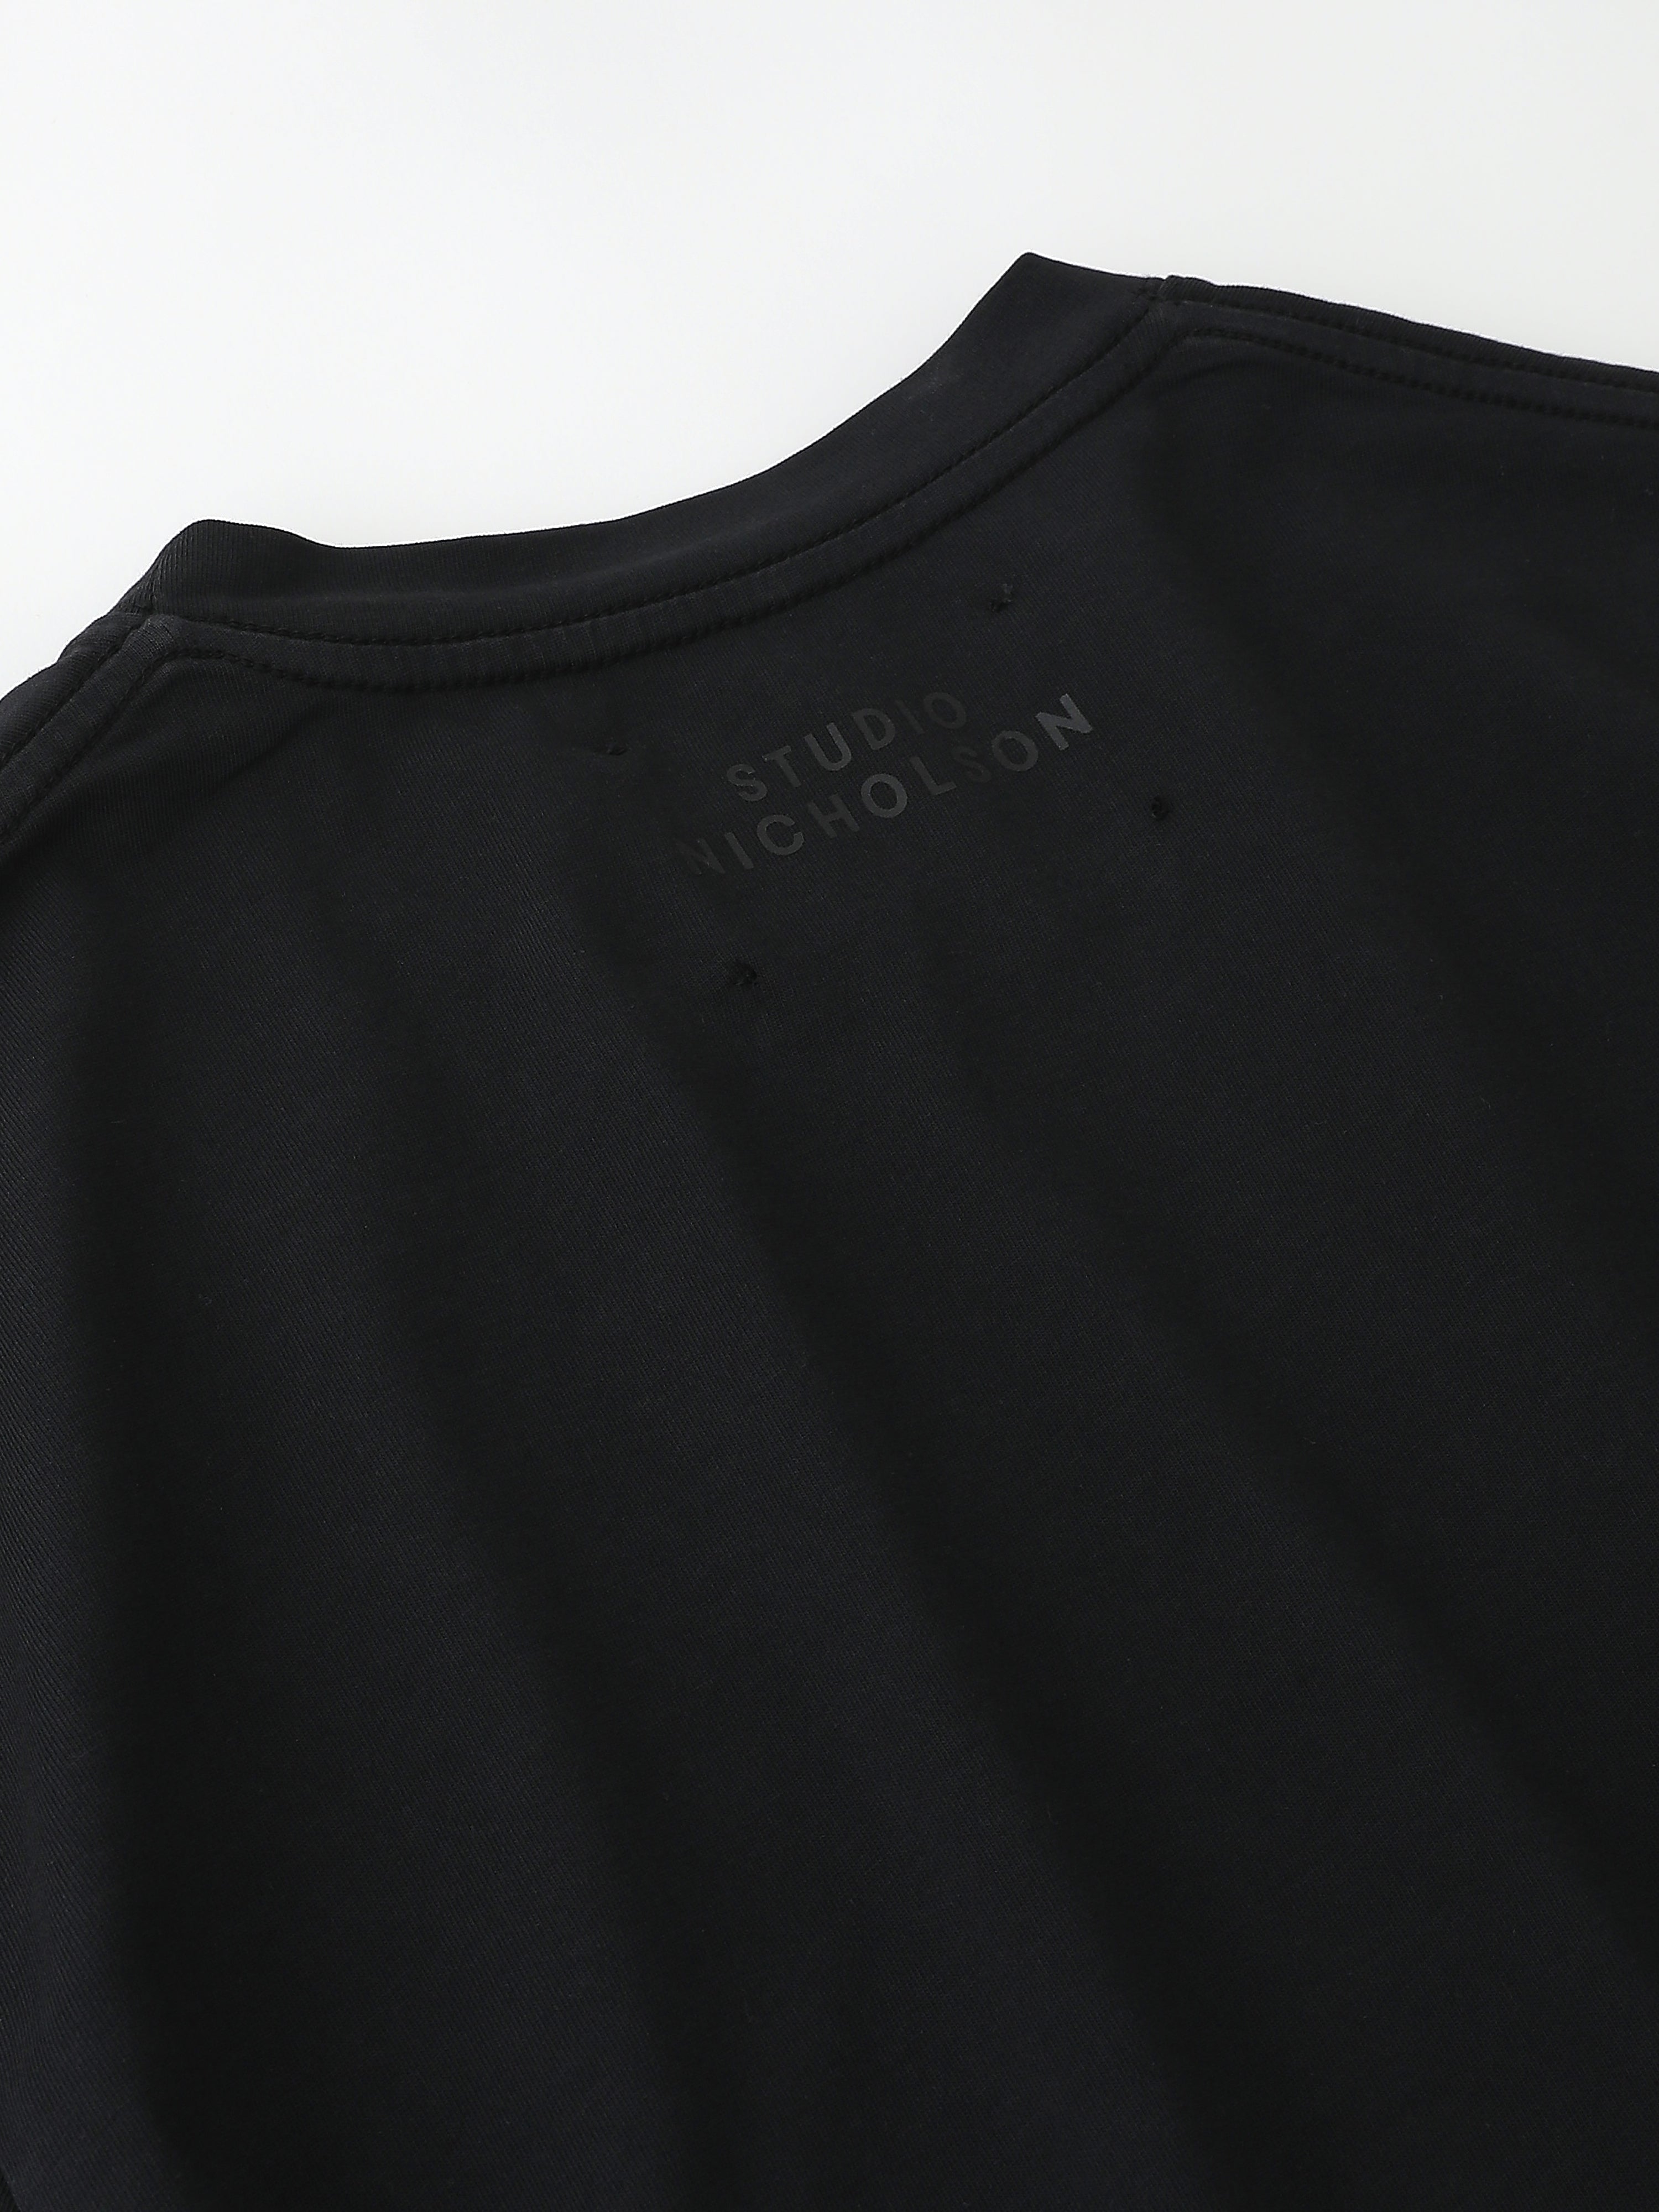 Lee T-Shirt In Black– Studio Nicholson